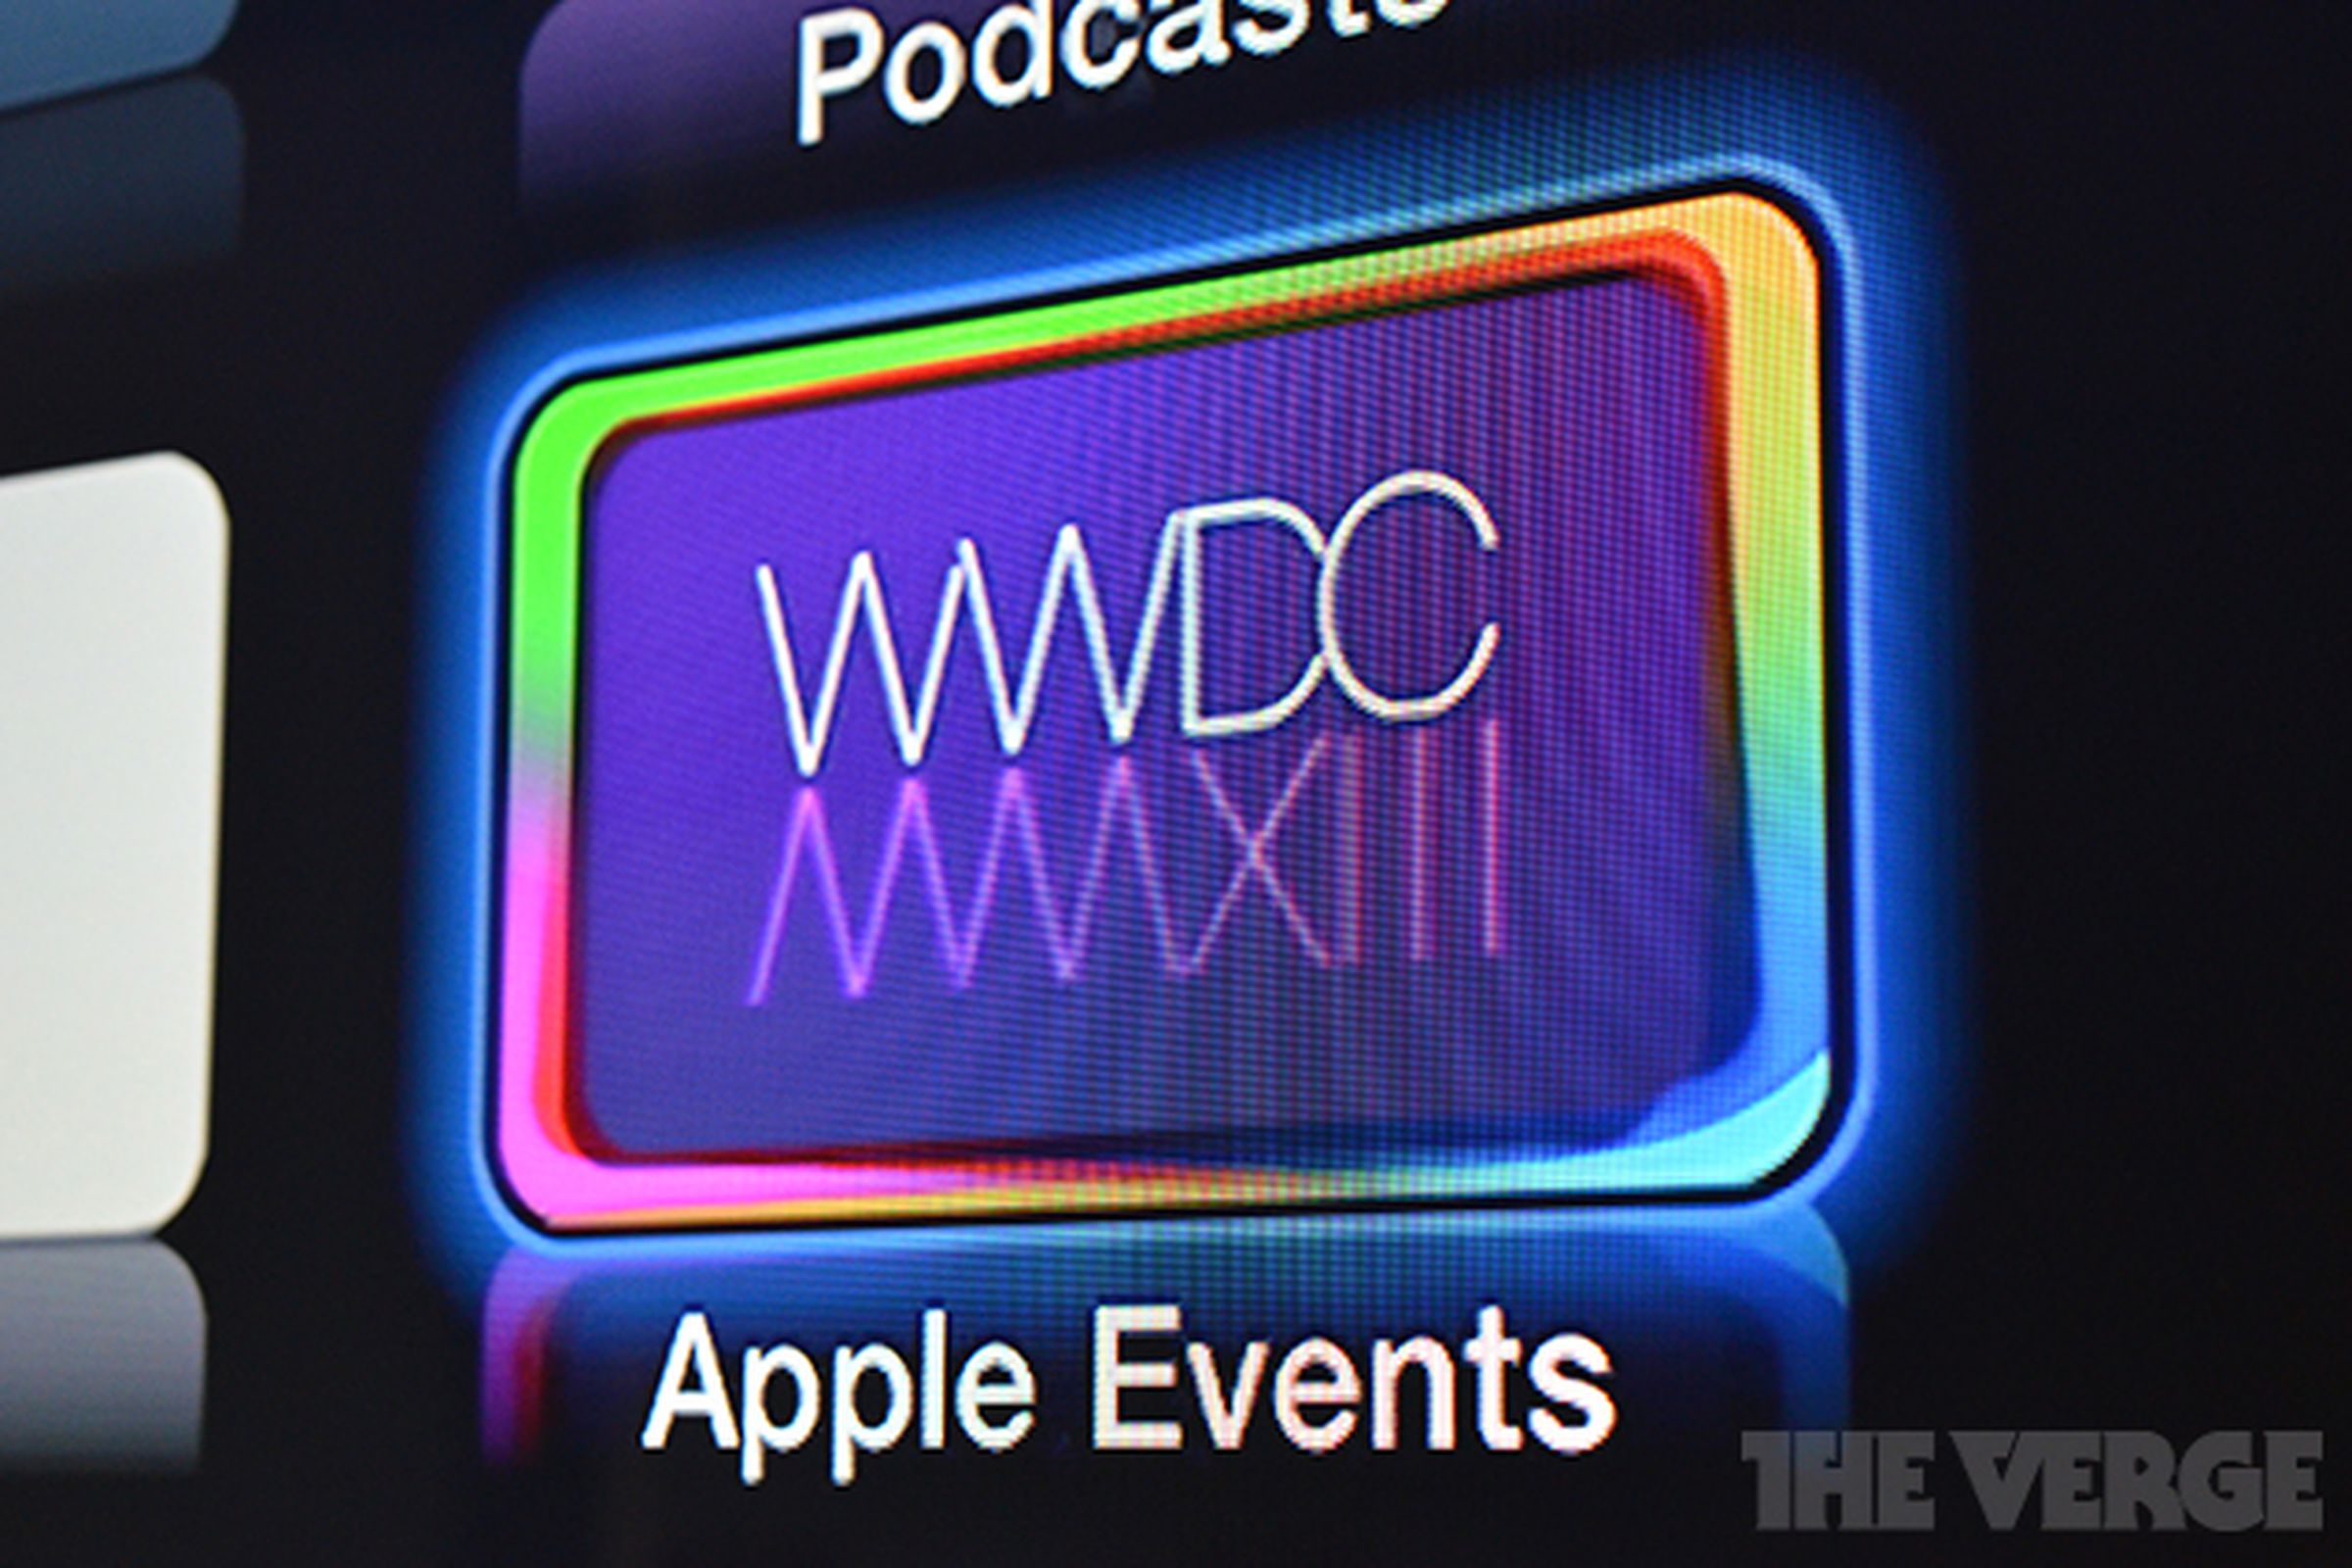 Apple TV WWDC stream